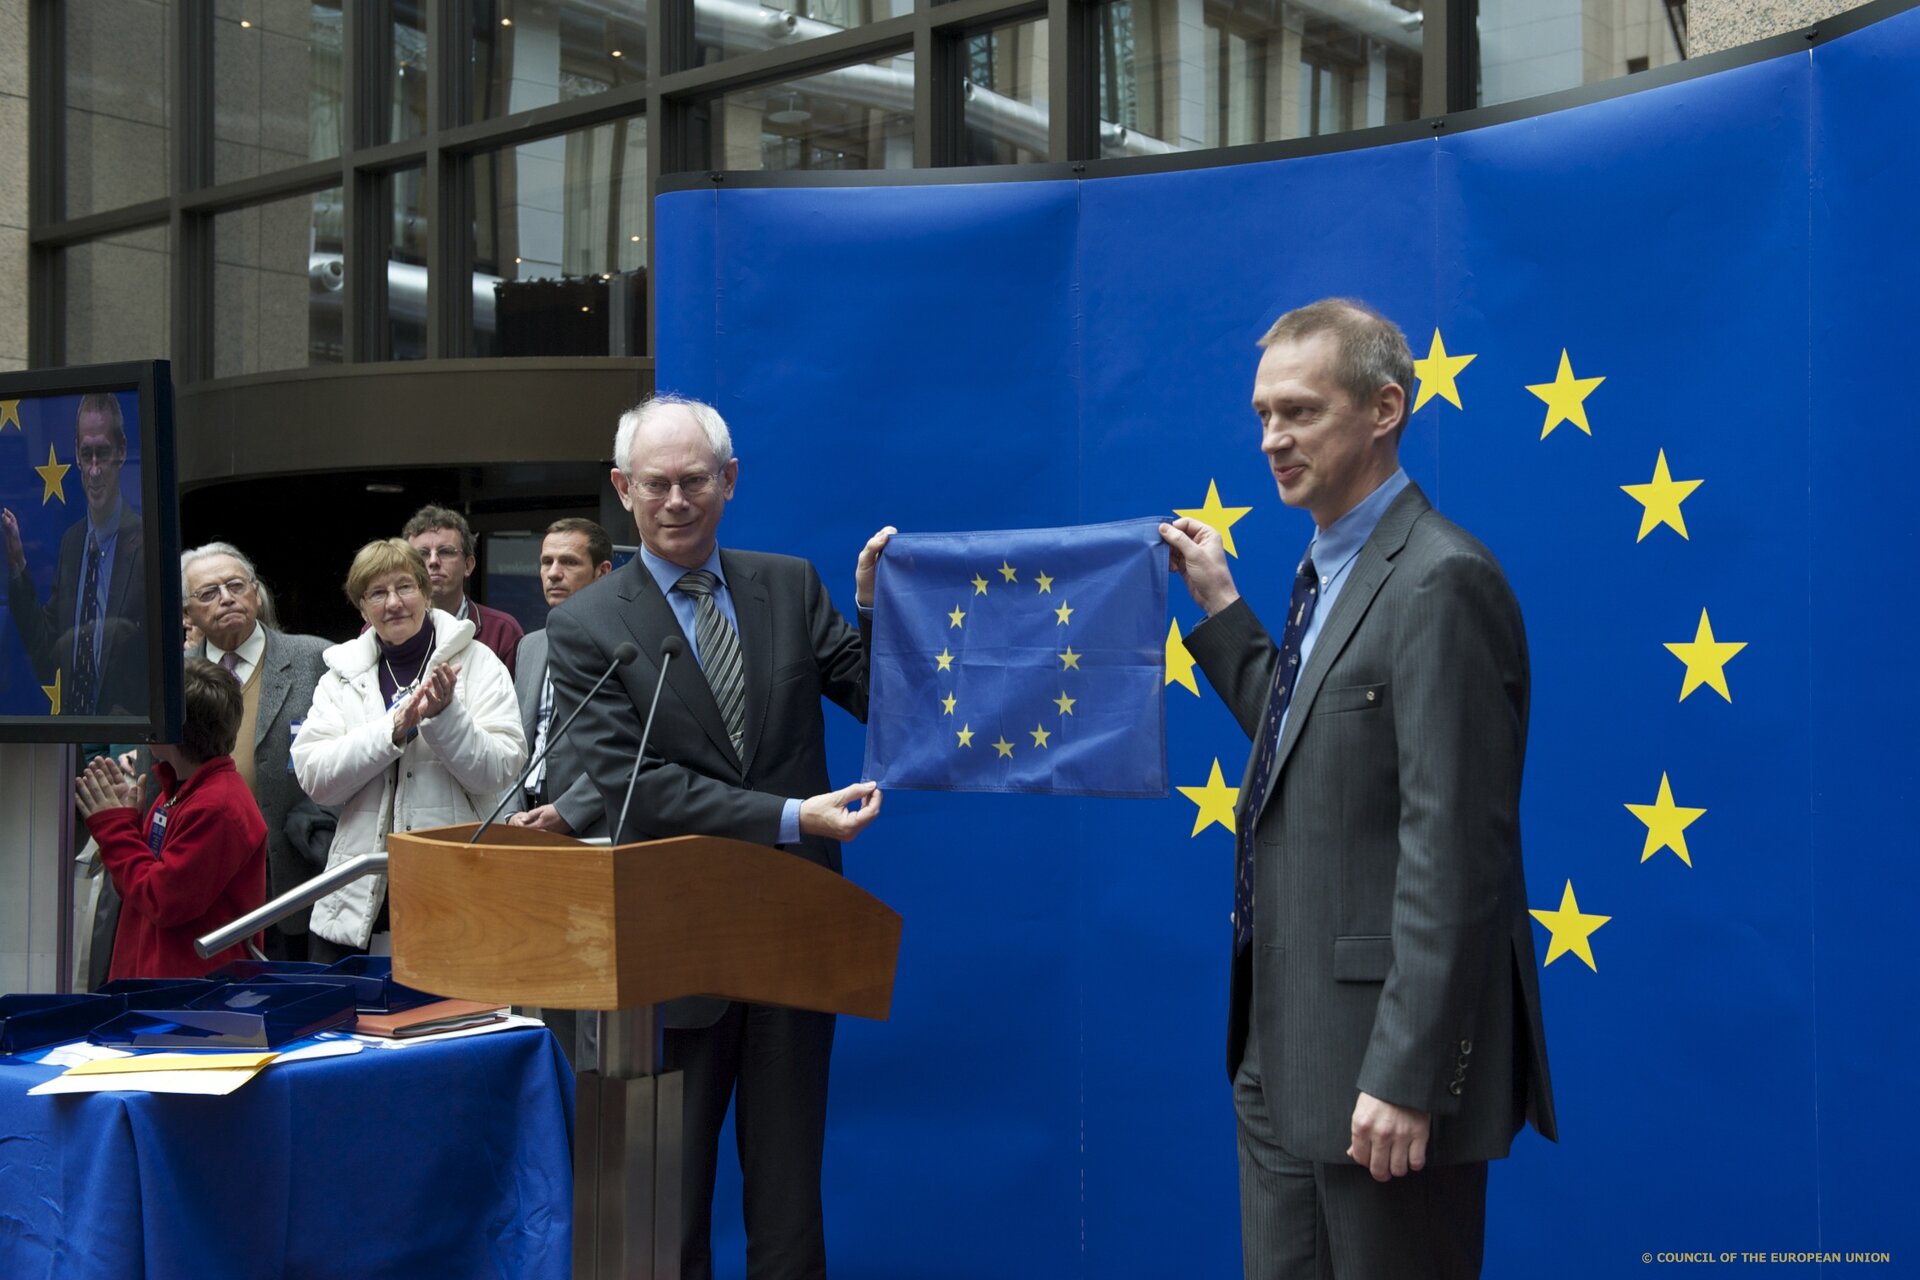 Frank De Winne and Herman van Rompuy